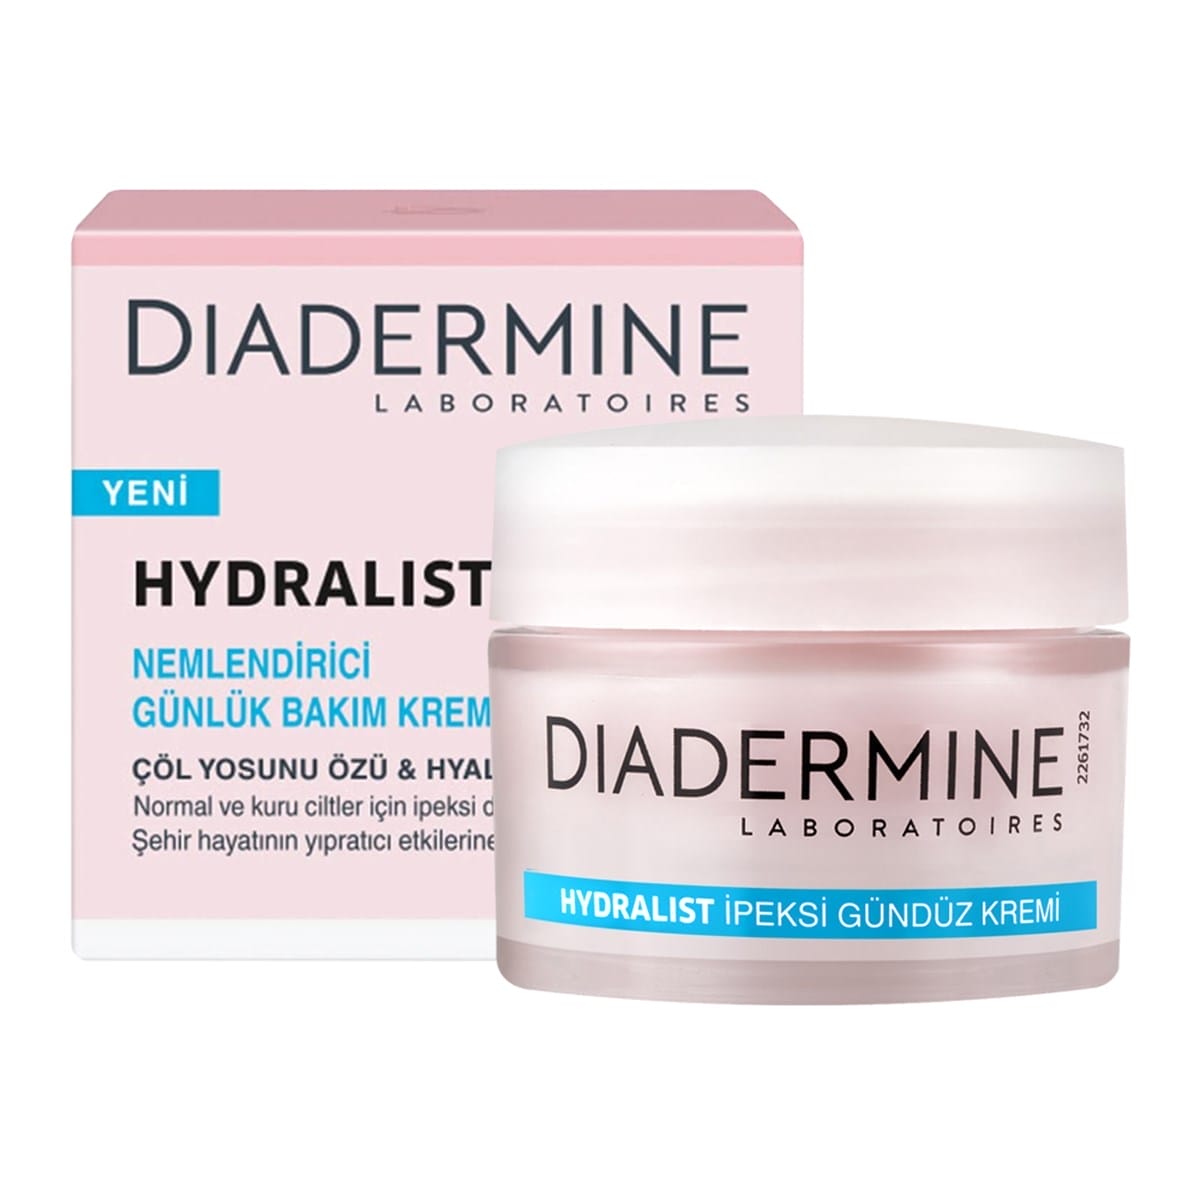 Diadermine Hydralis Moisturizing Daily Care Cream Silky Texture 50 ml 